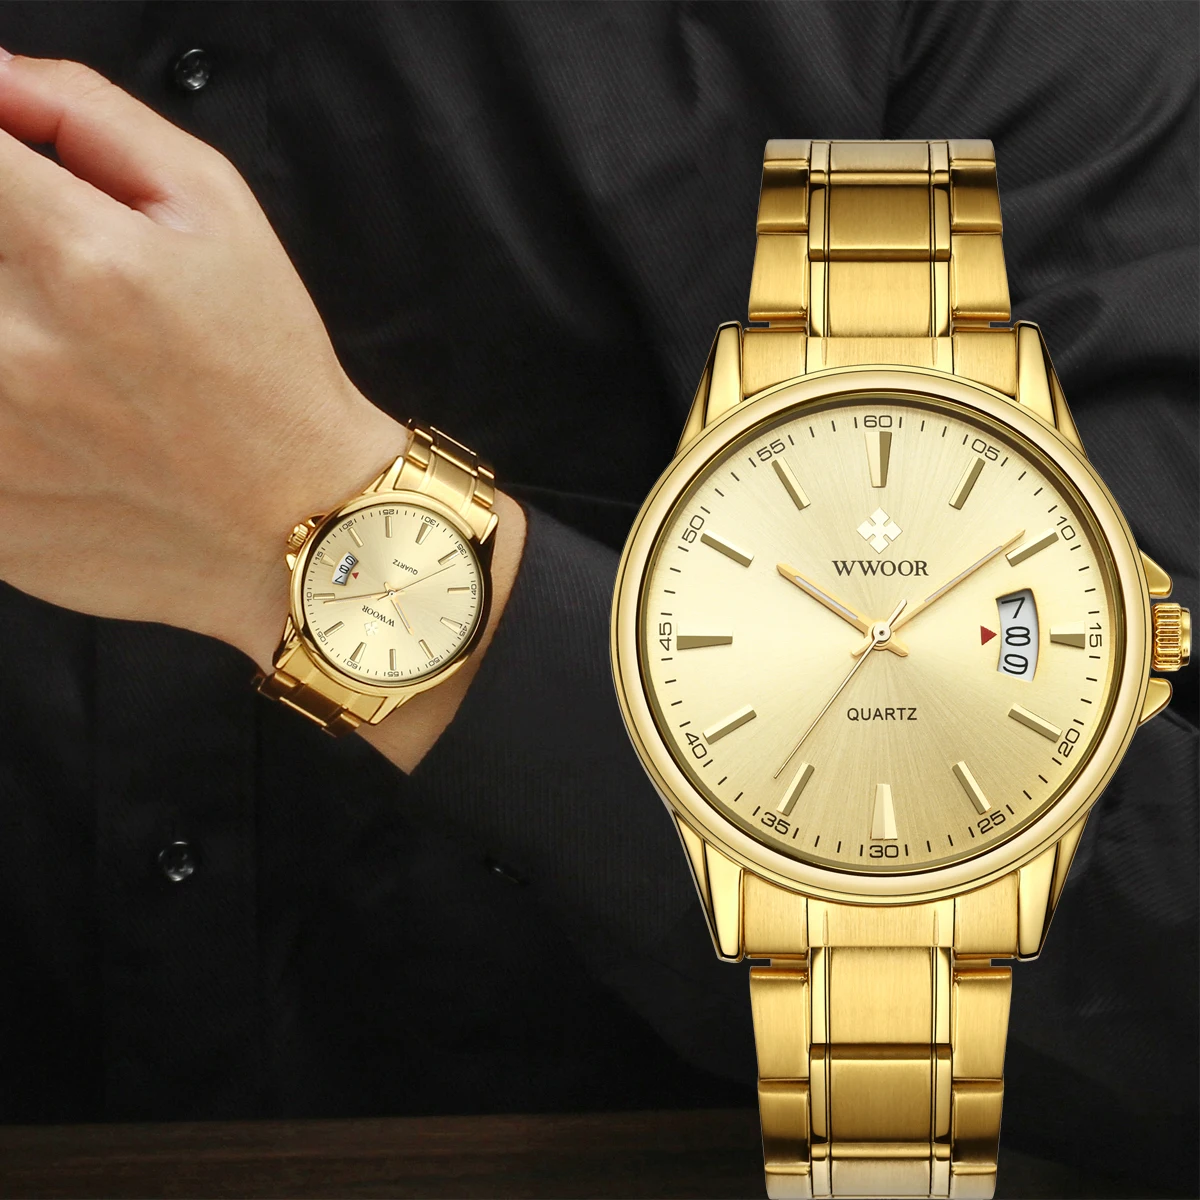 

WWOOR Top Brand Luxury Mens Watch Fashion Gold Watch For Men Waterproof Date Stainless Steel Male Quartz Clock Relogio Masculino